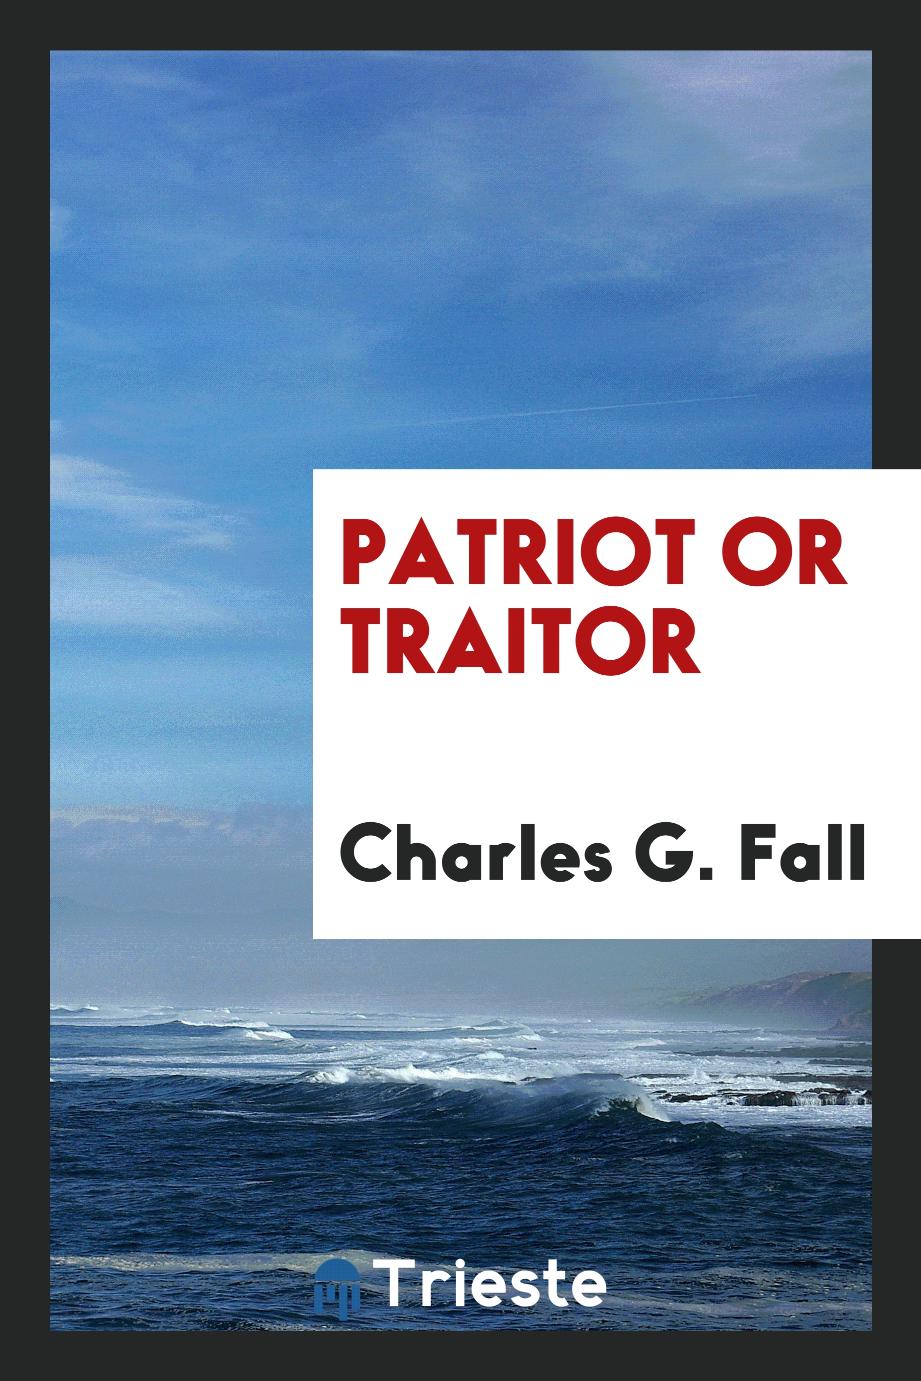 Patriot or traitor